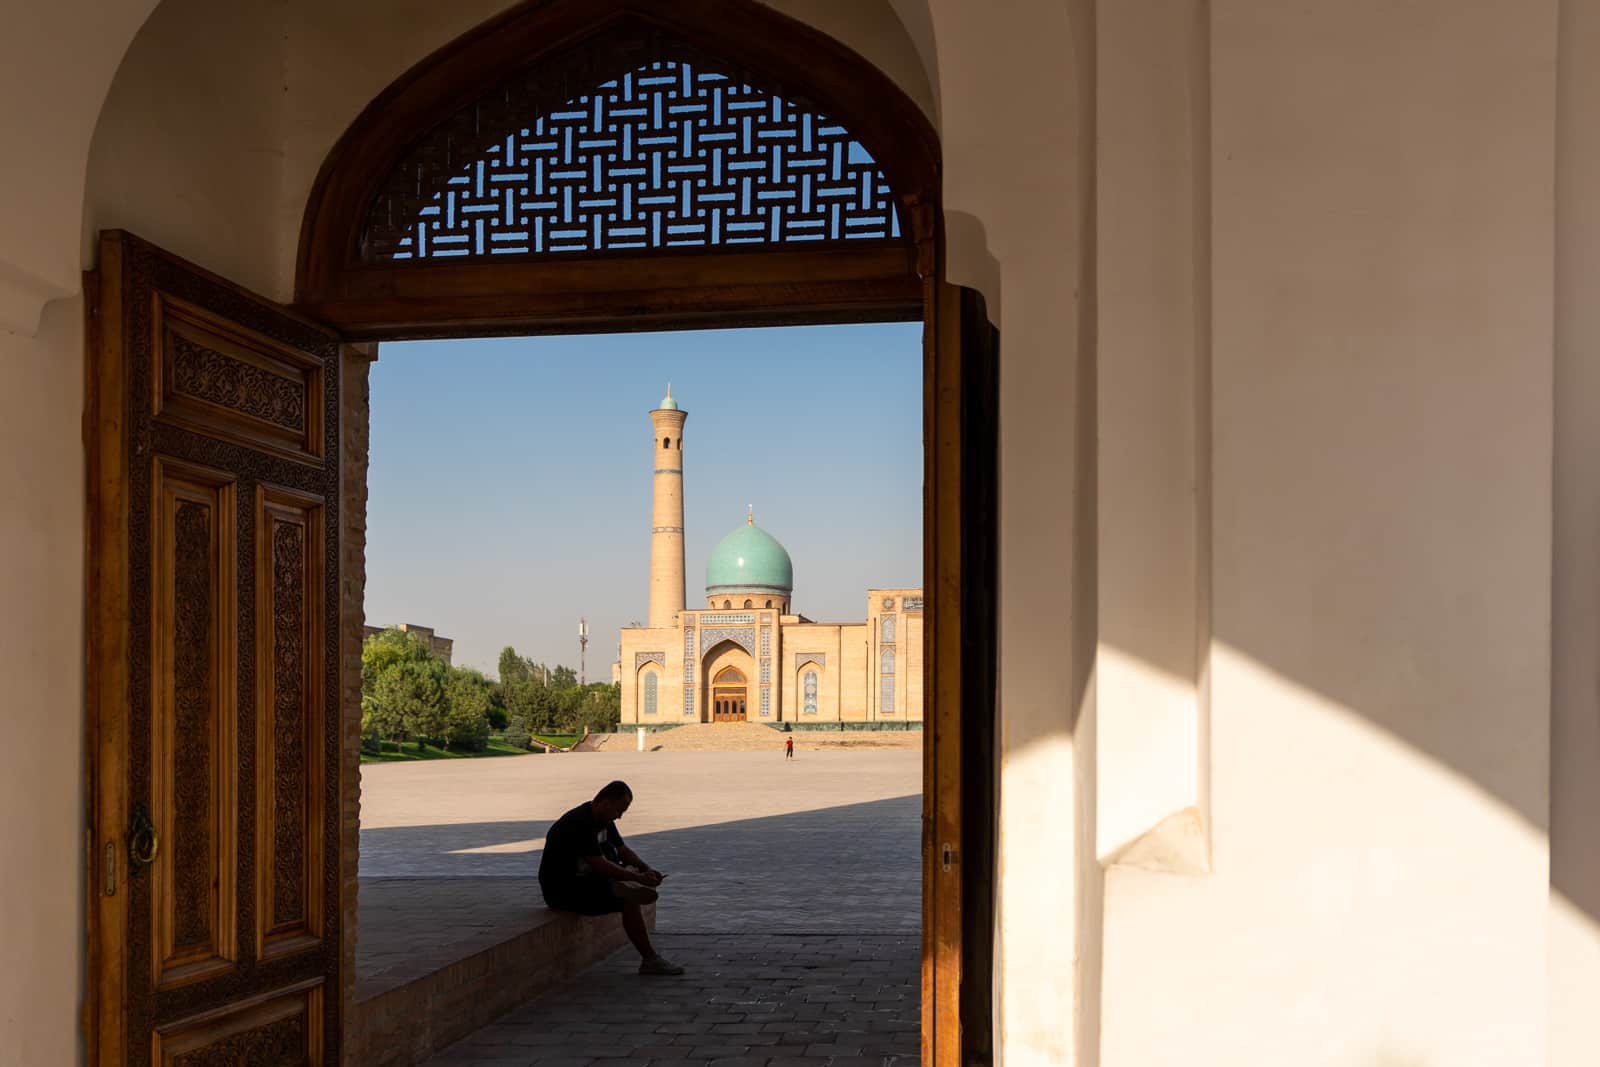 Man sitting in Khast Imam complex in Tashkent, Uzbekistan